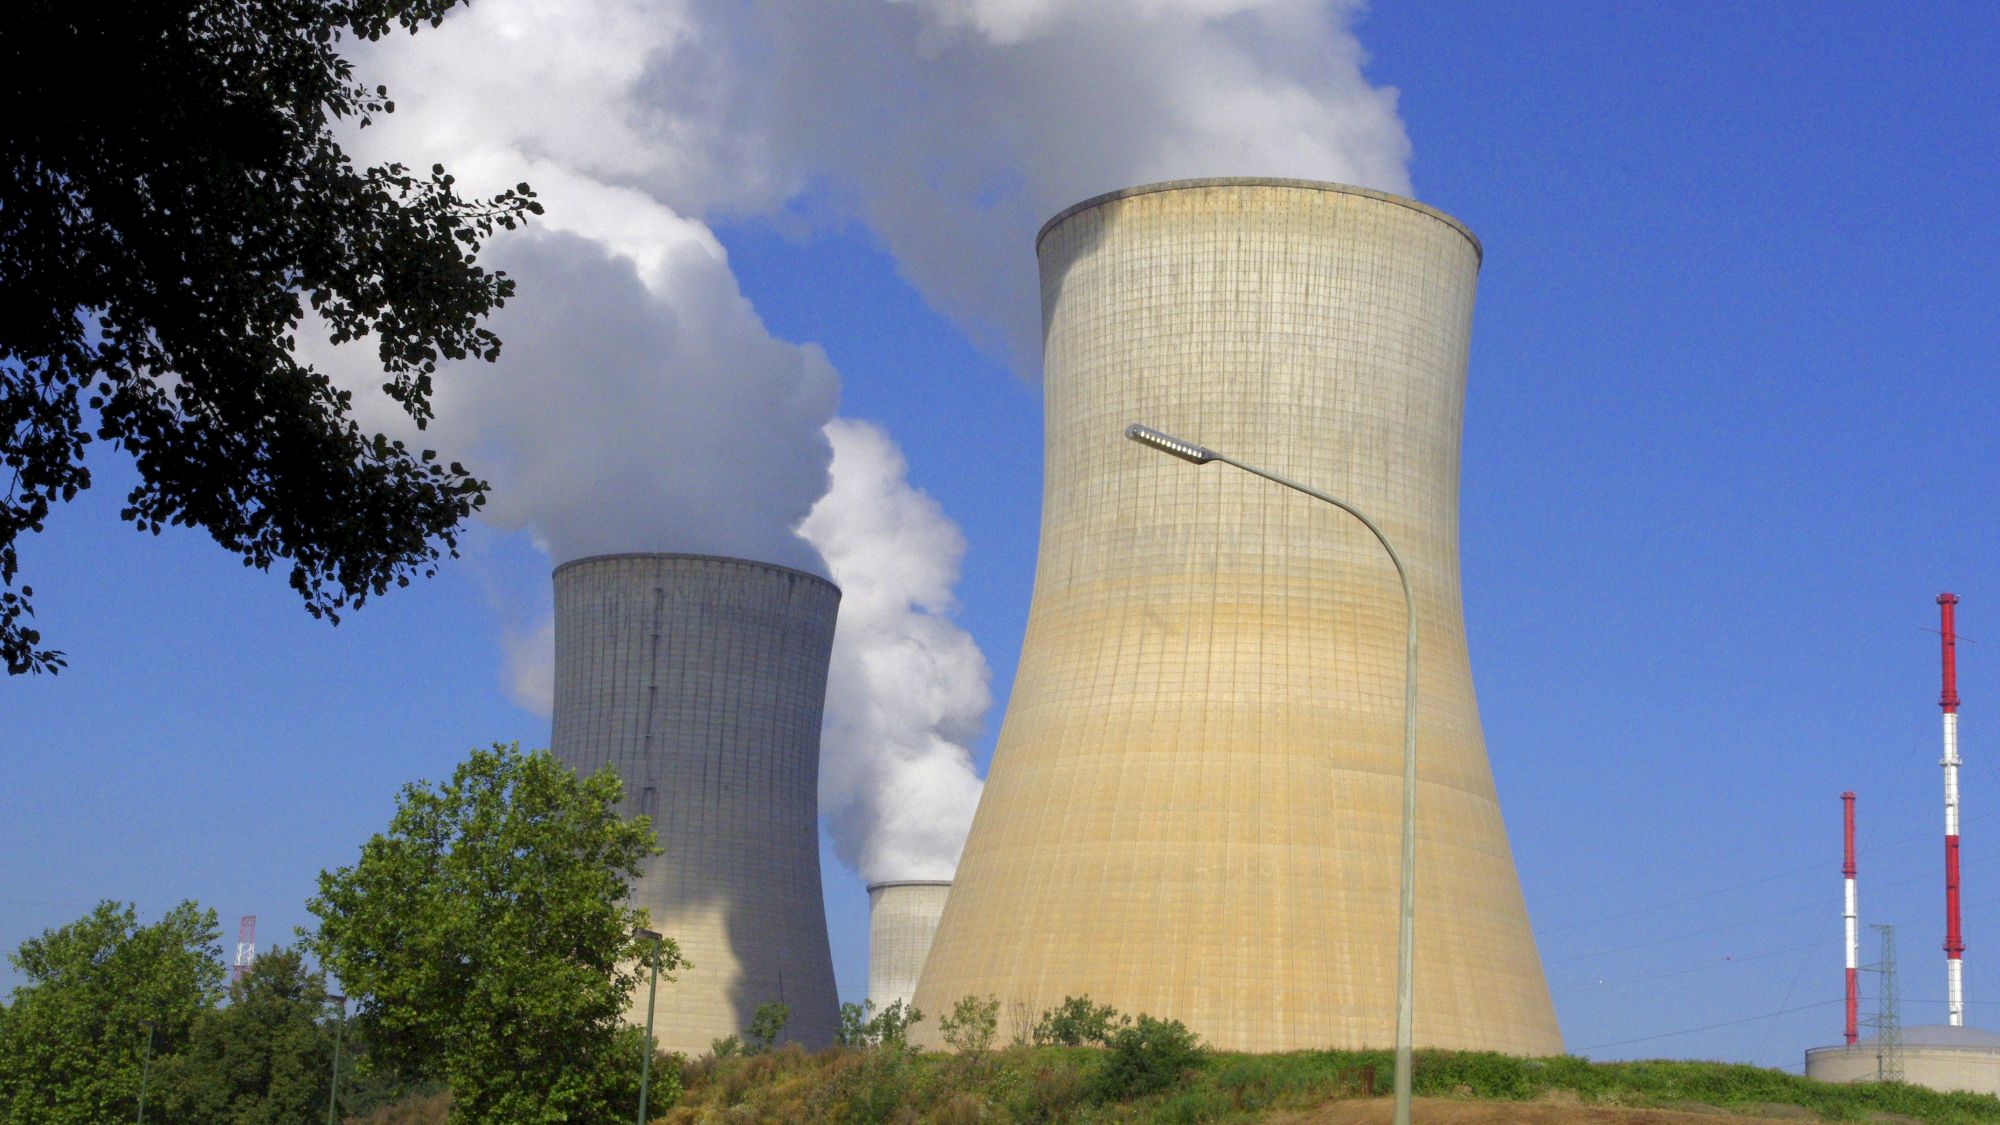 Das Kernkraftwerk im belgischen Tihange. (c) Traumrune / Wikimedia Commons / CC BY 3.0